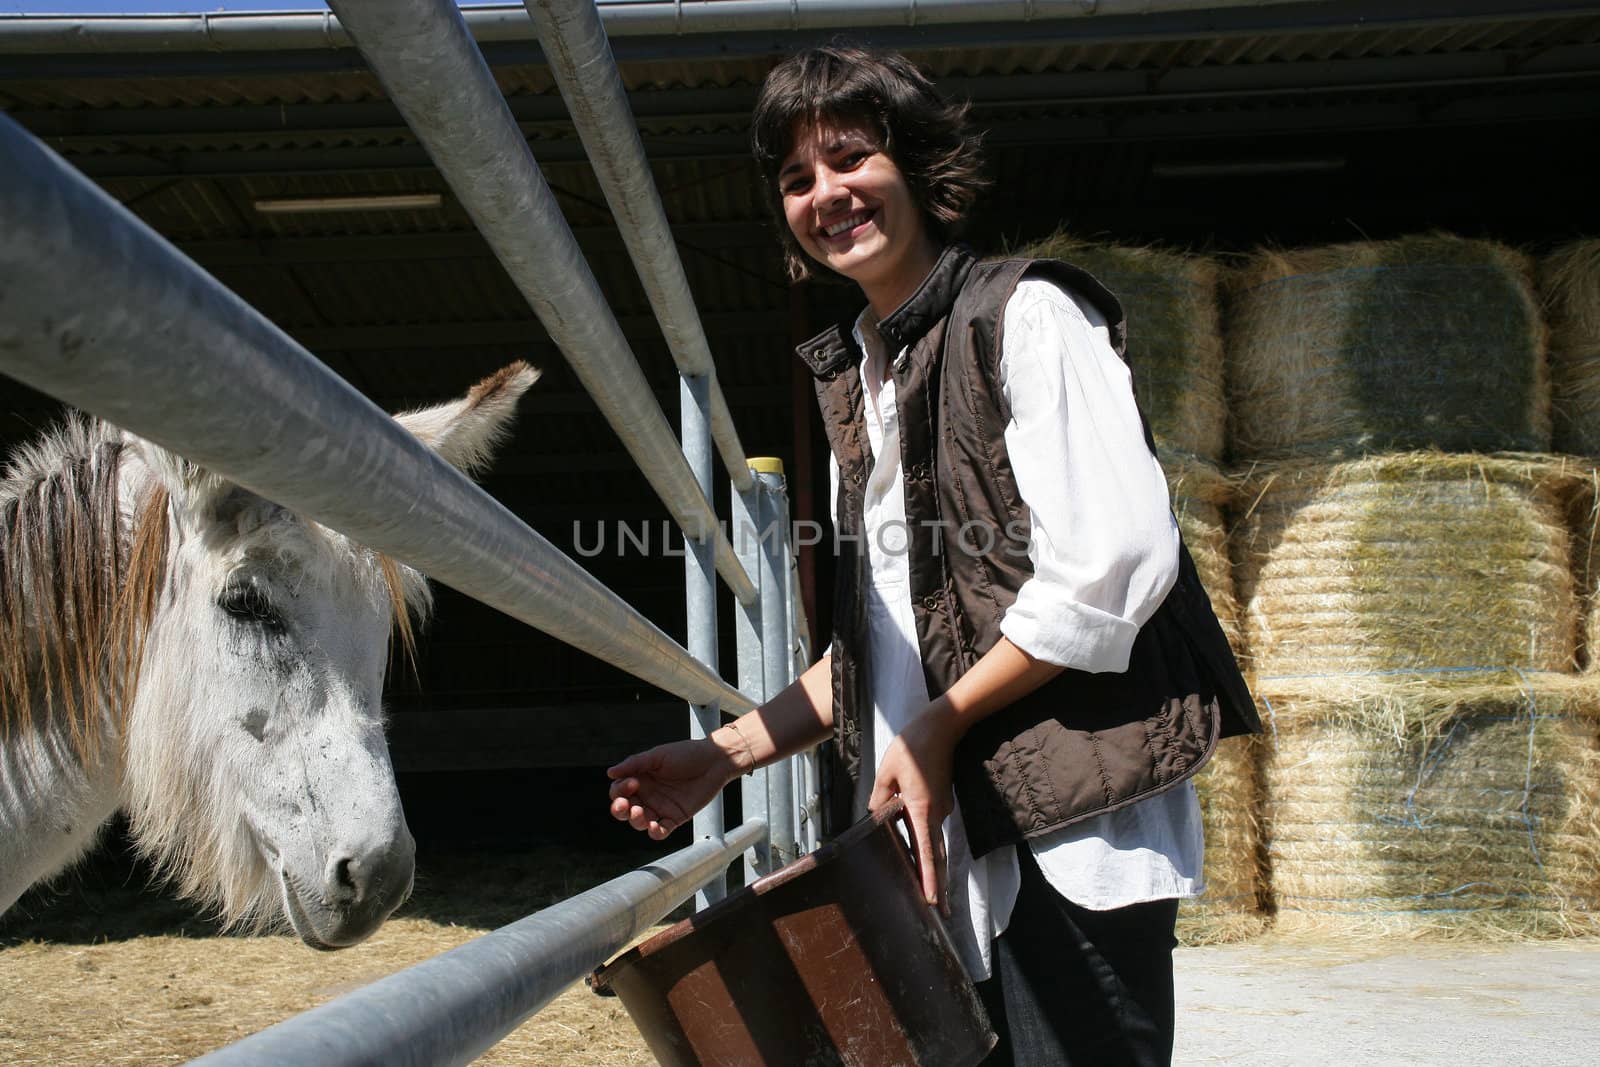 Female farmer stood by horse enclosure